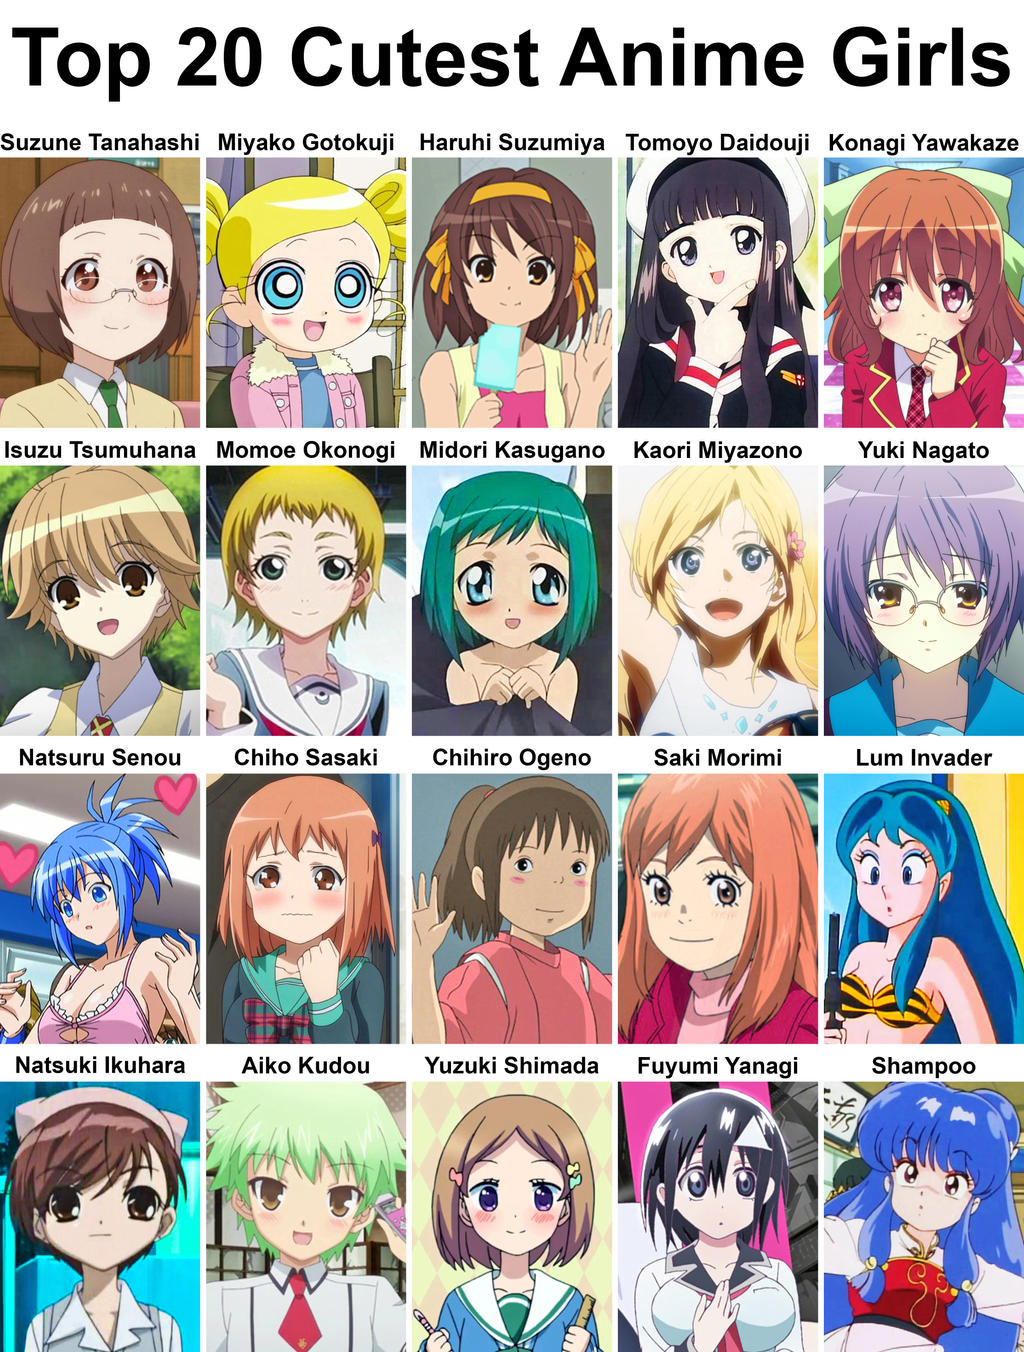 Top Cutest Anime Girls My Picks By Silverbuller On Deviantart